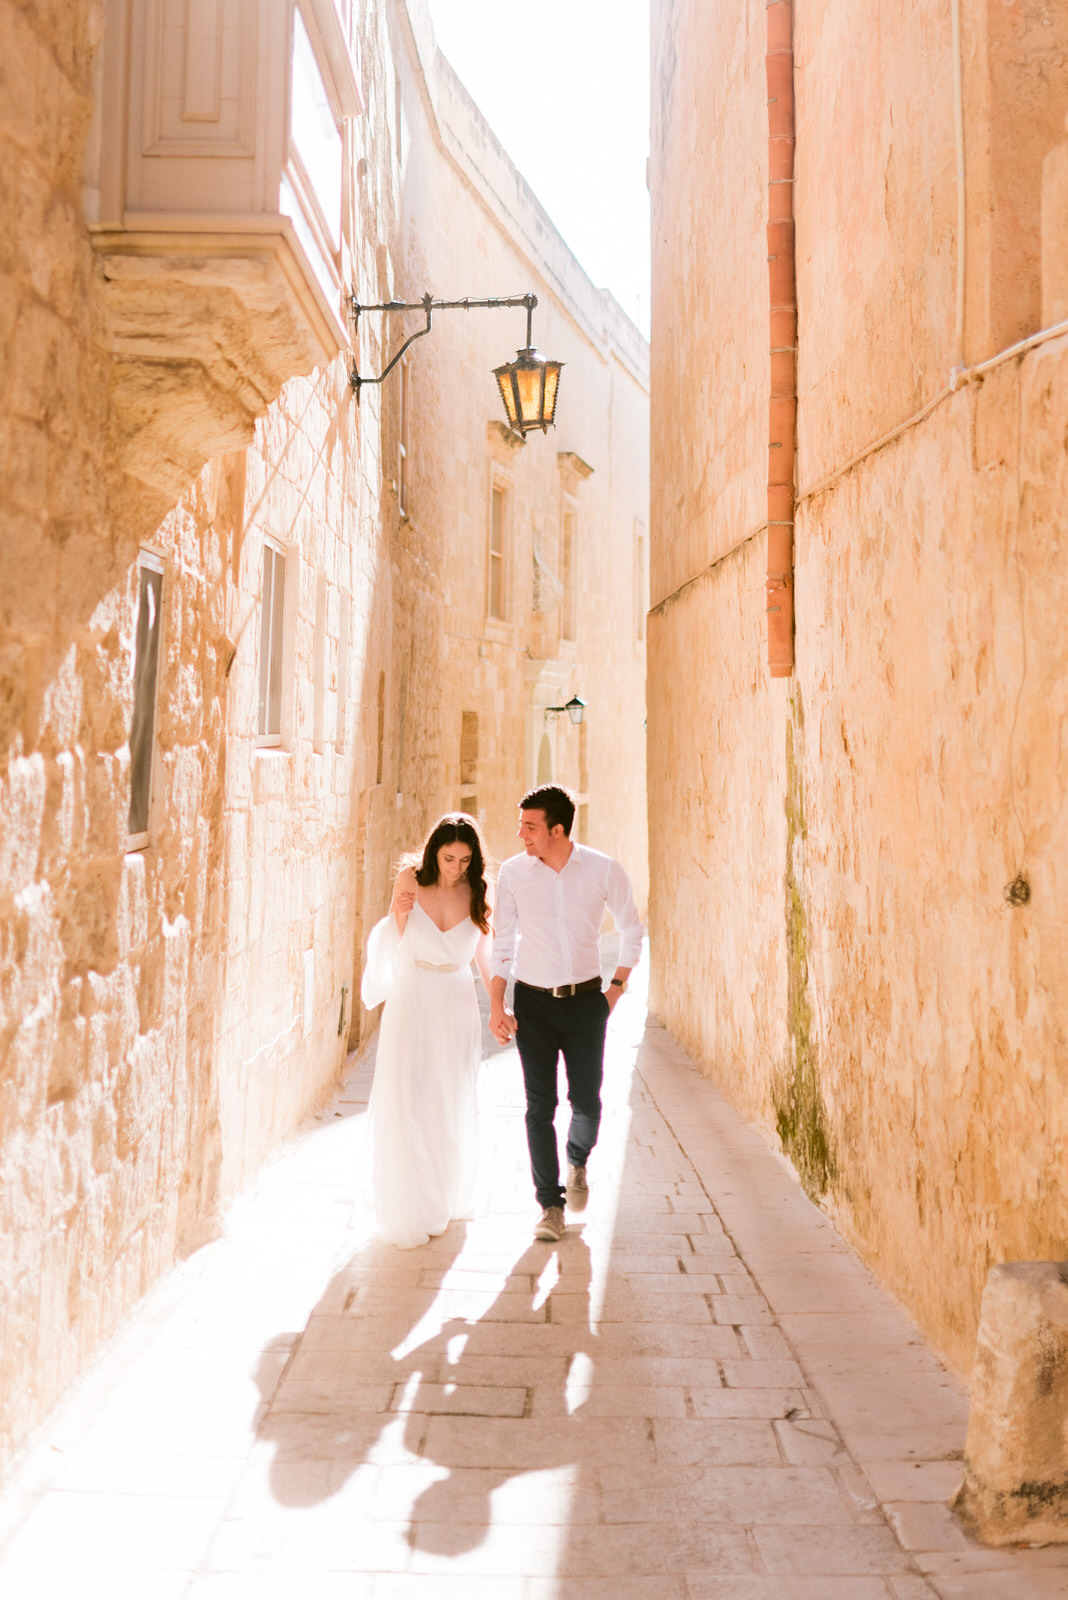 mdina wedding, malta wedding photography, malta elopement, golden bay malta wedding photos, wedding photographer malta, malta wedding venue, villa bologna wedding (30).jpg